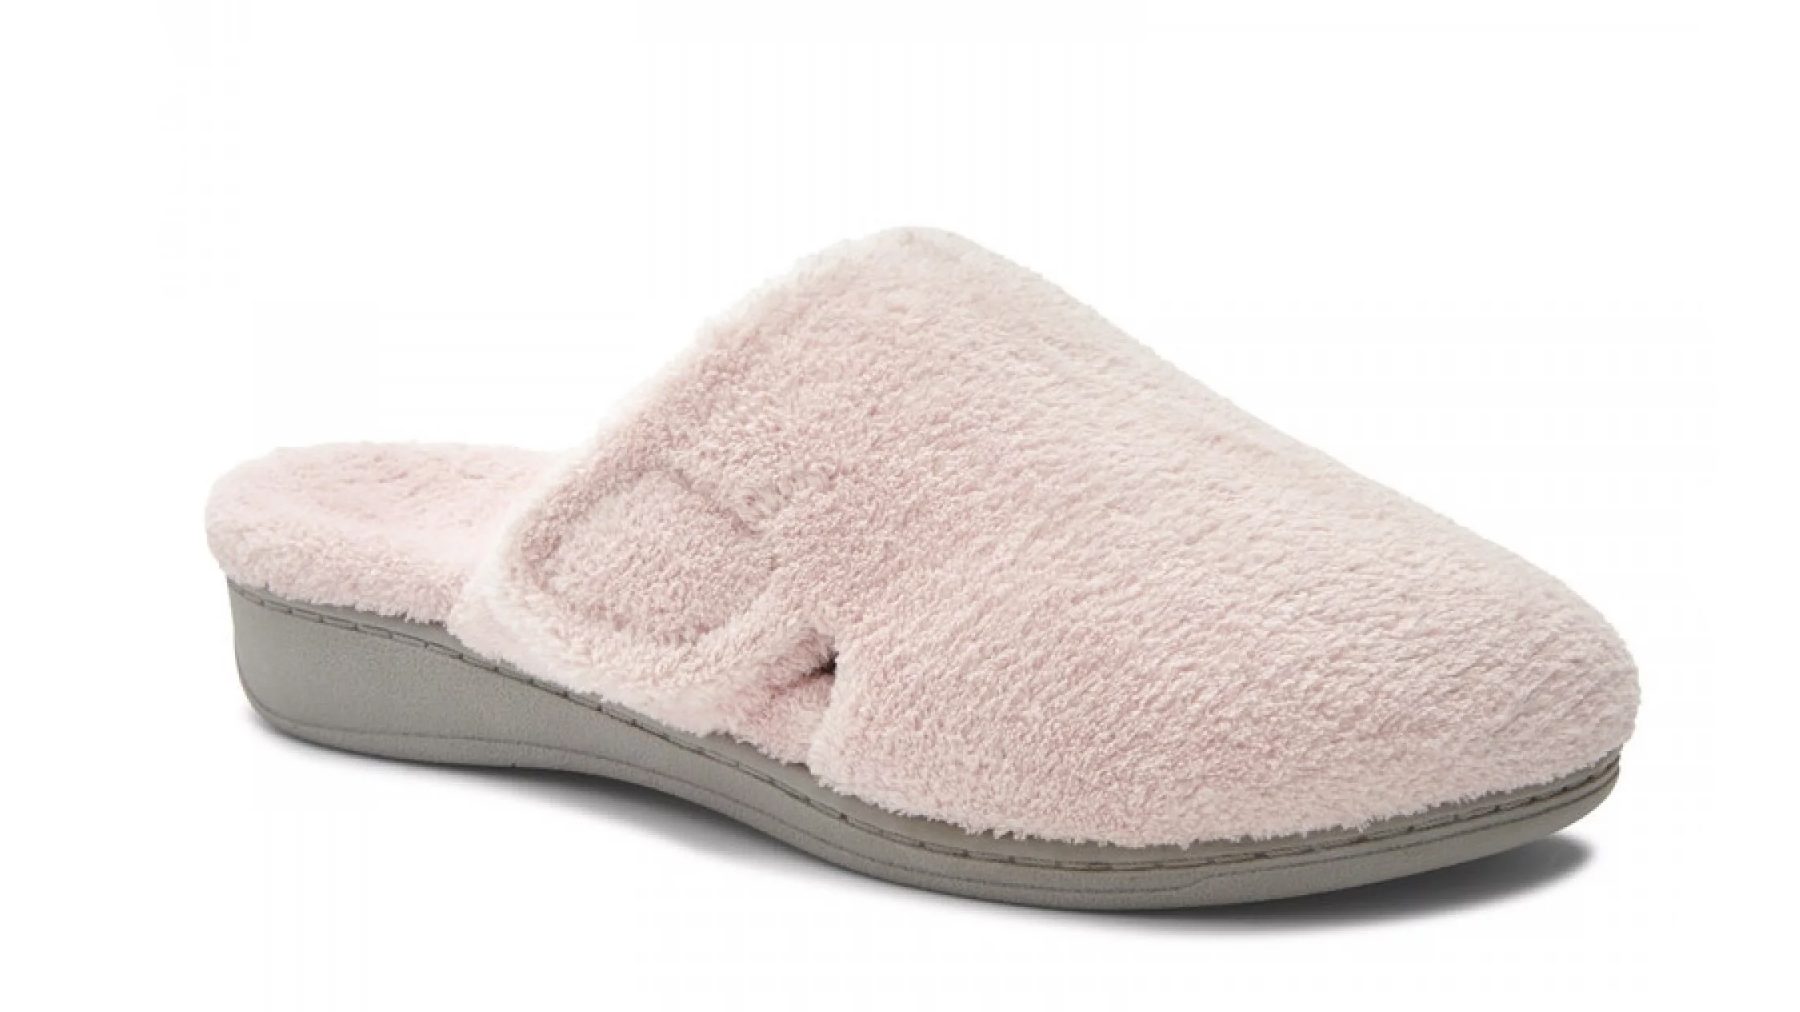 supportive slippers for elderly